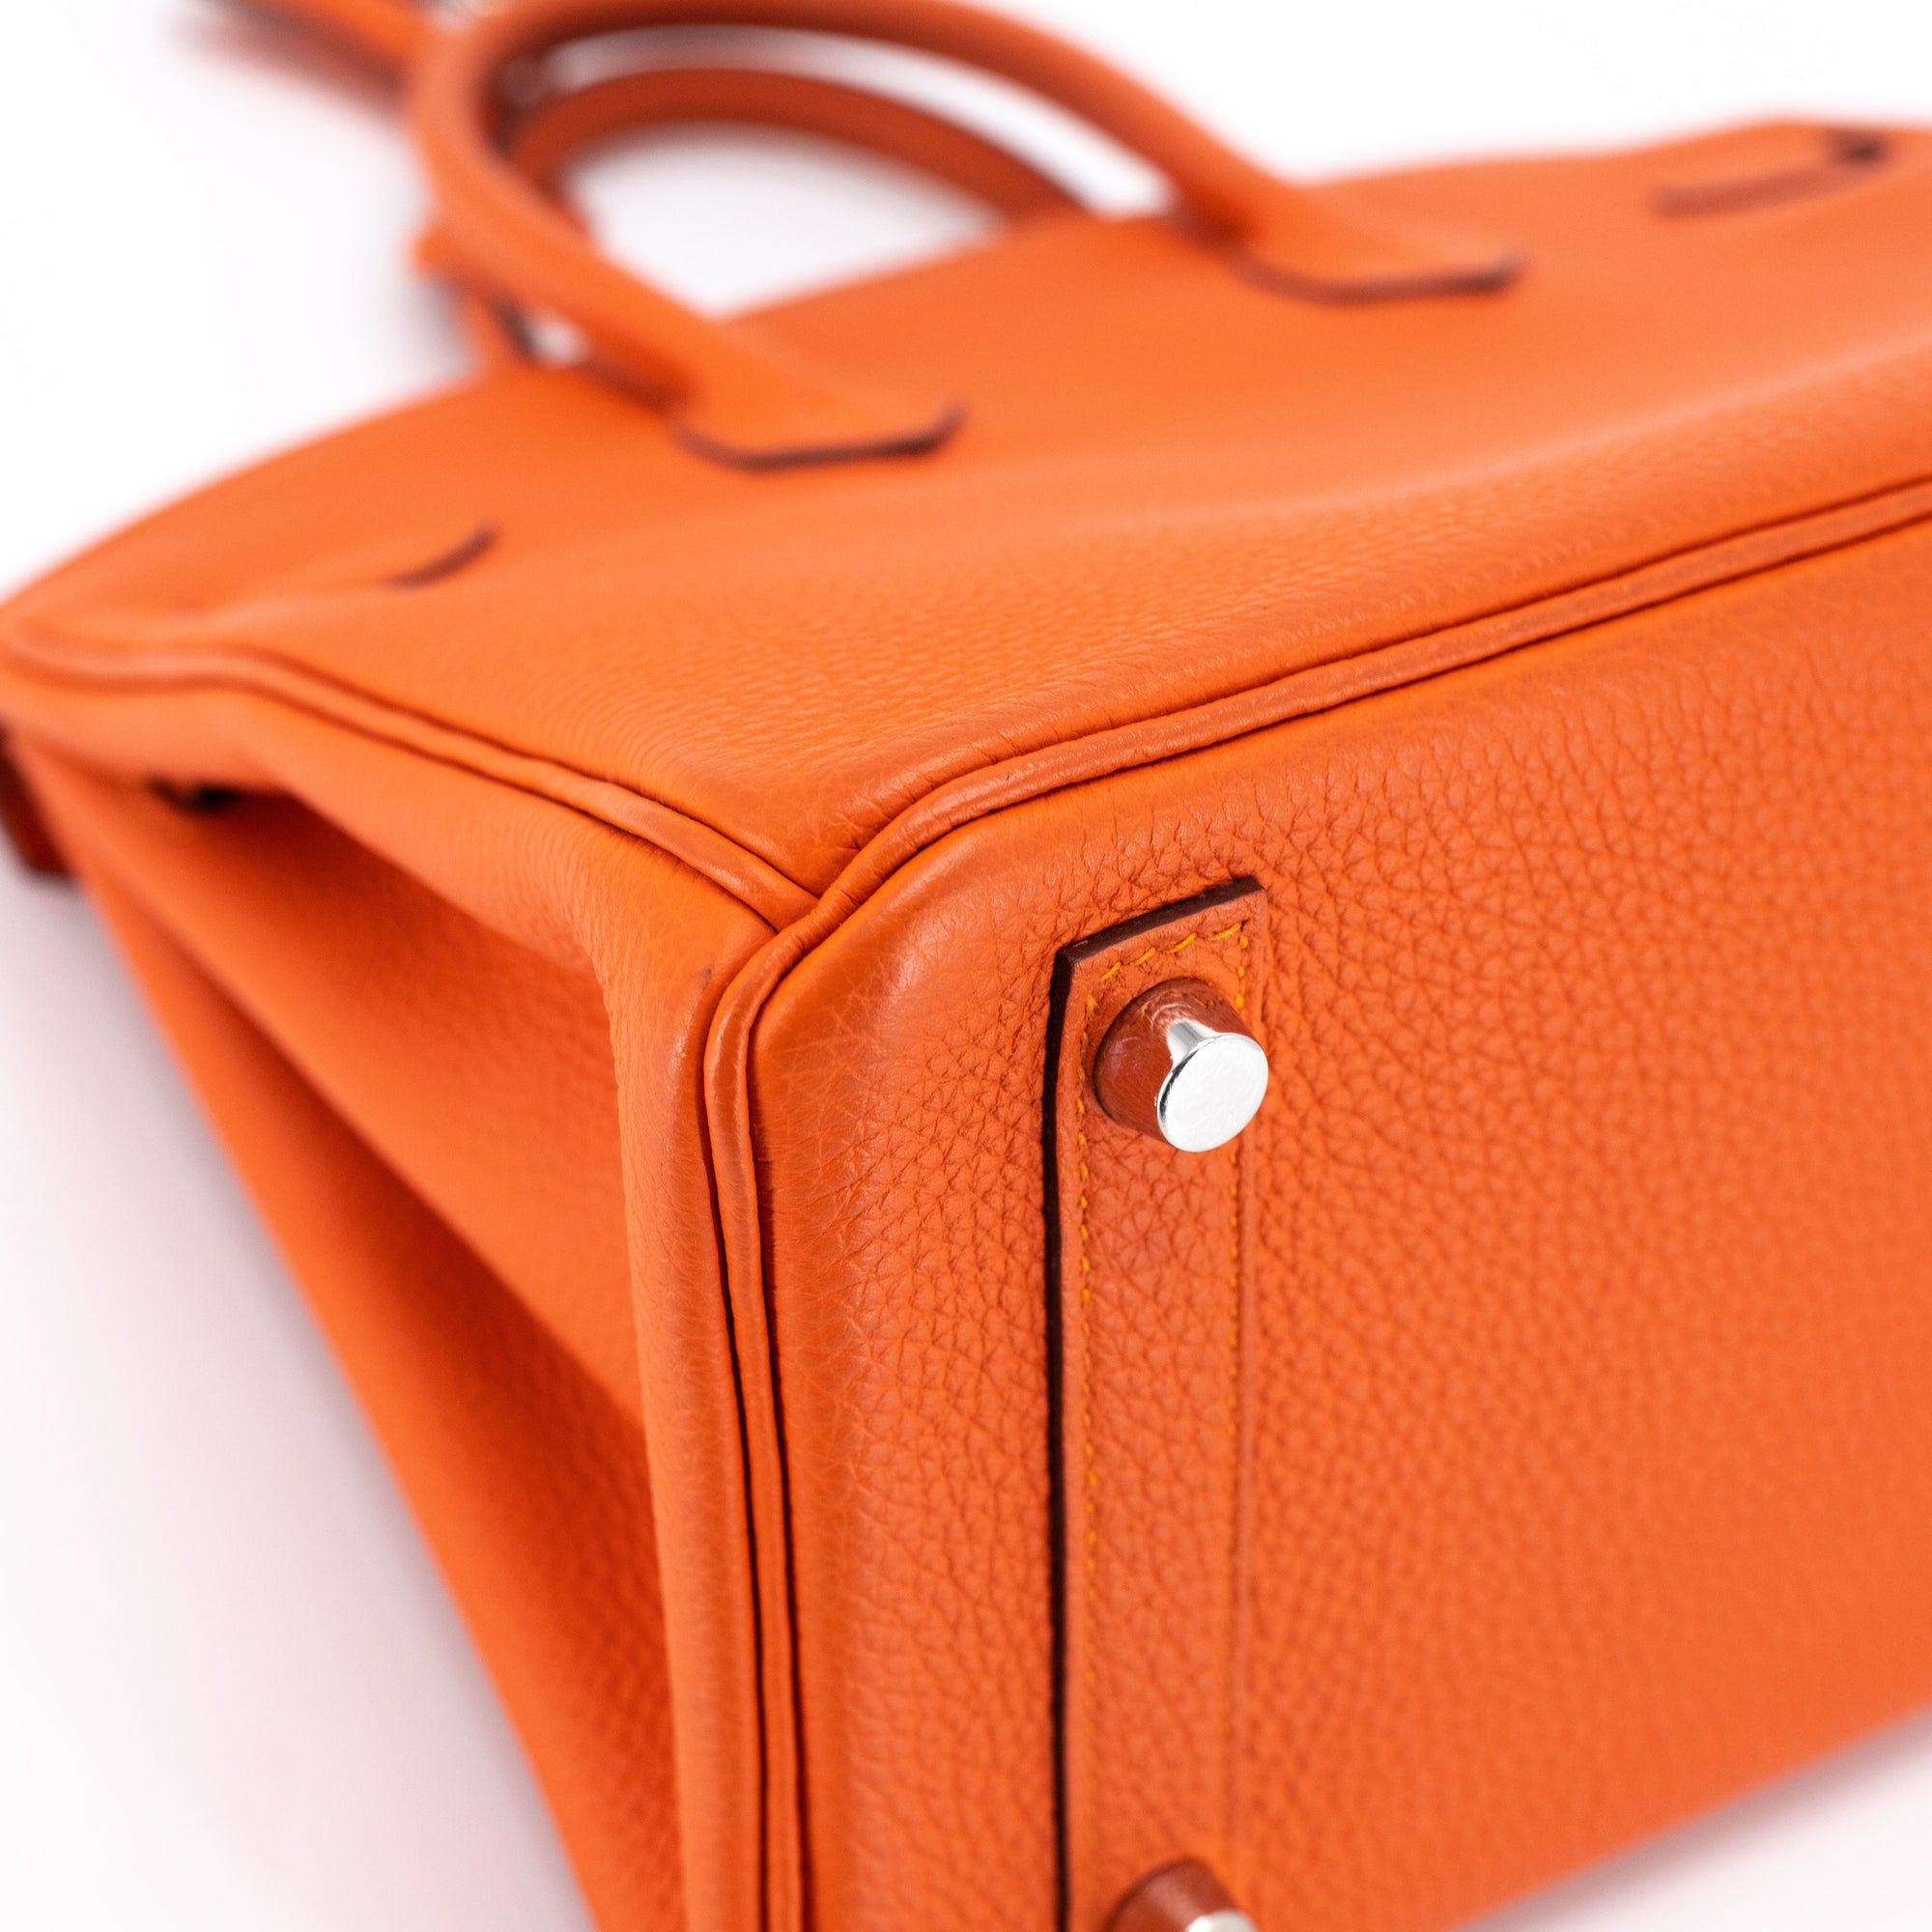 FWRD Renew Hermes Birkin 25cm Handbag in Feu Orange